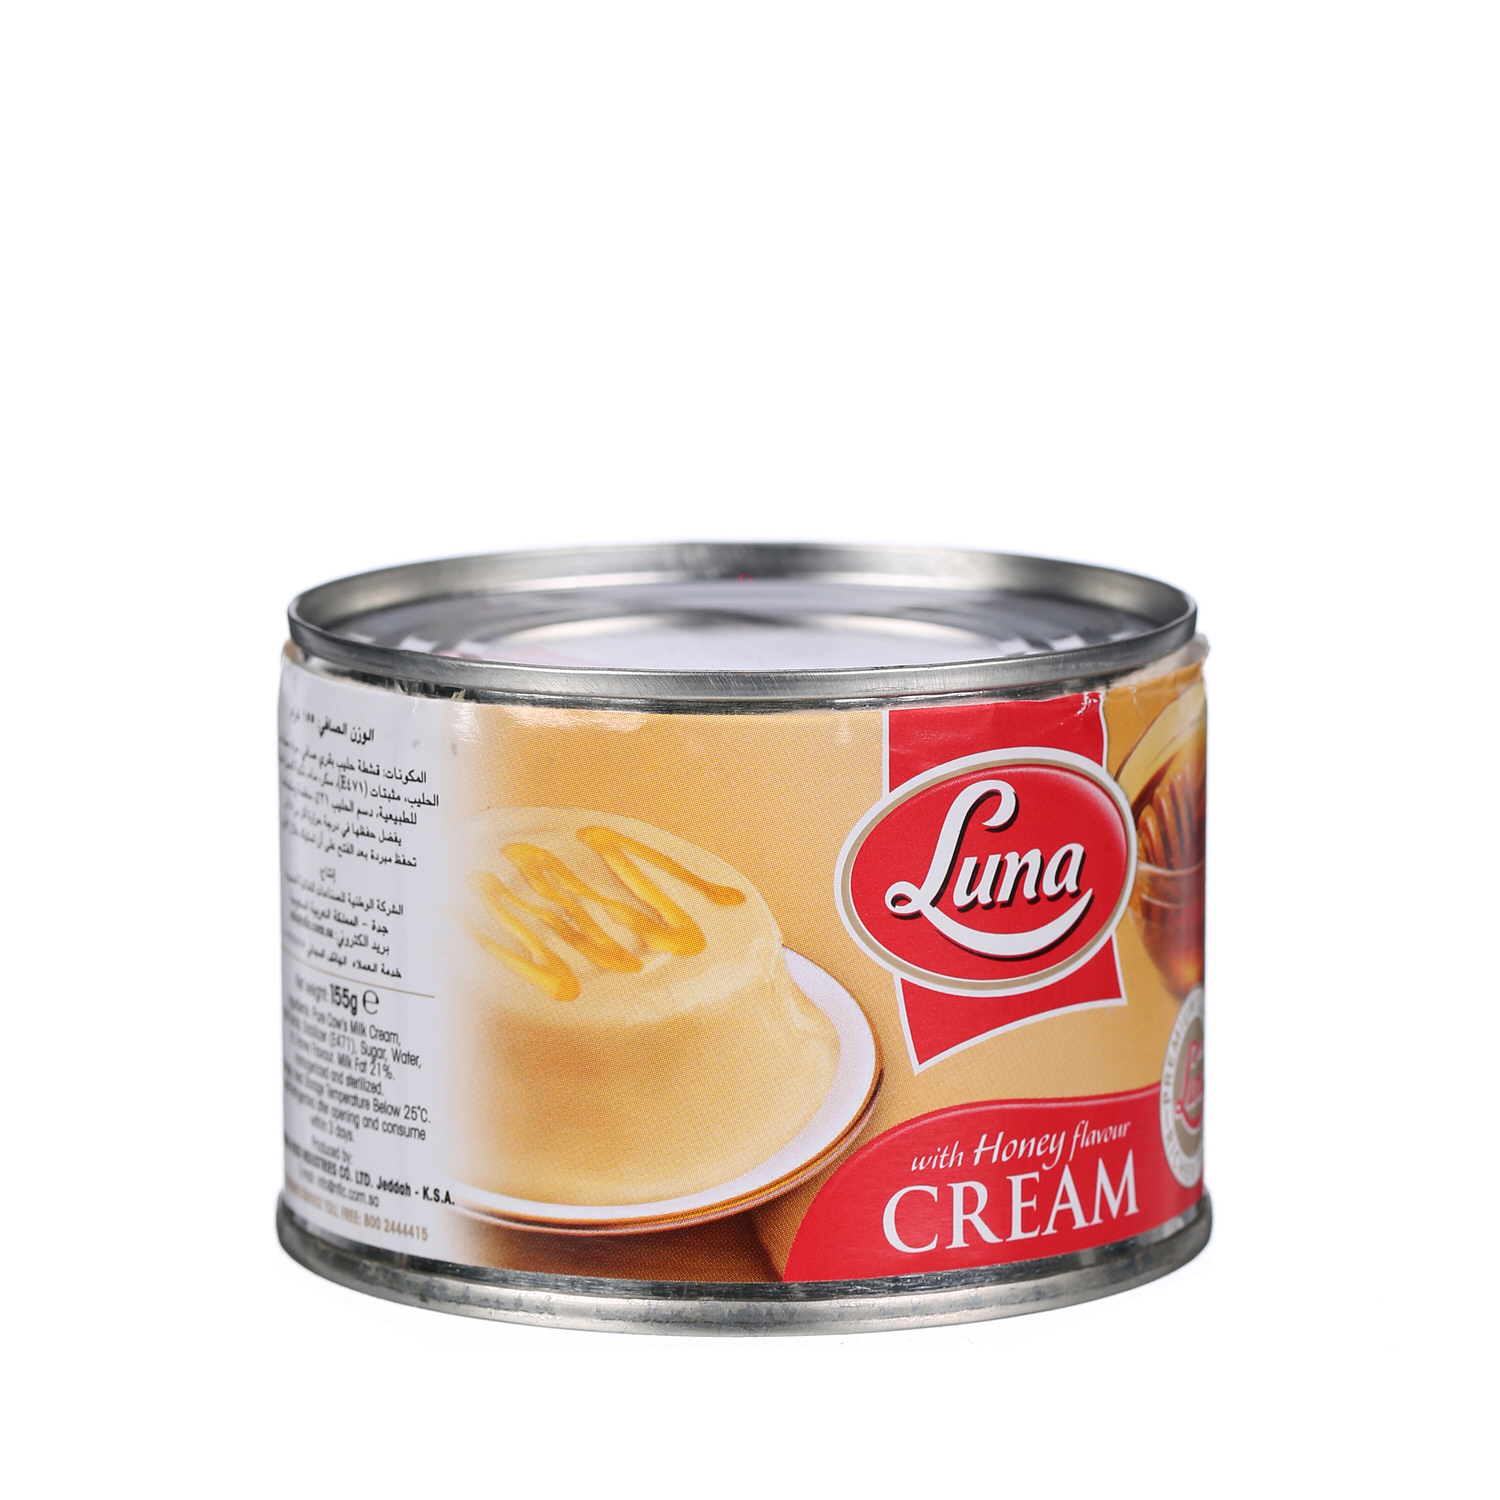 Luna Cream Honey Flavor 170 g